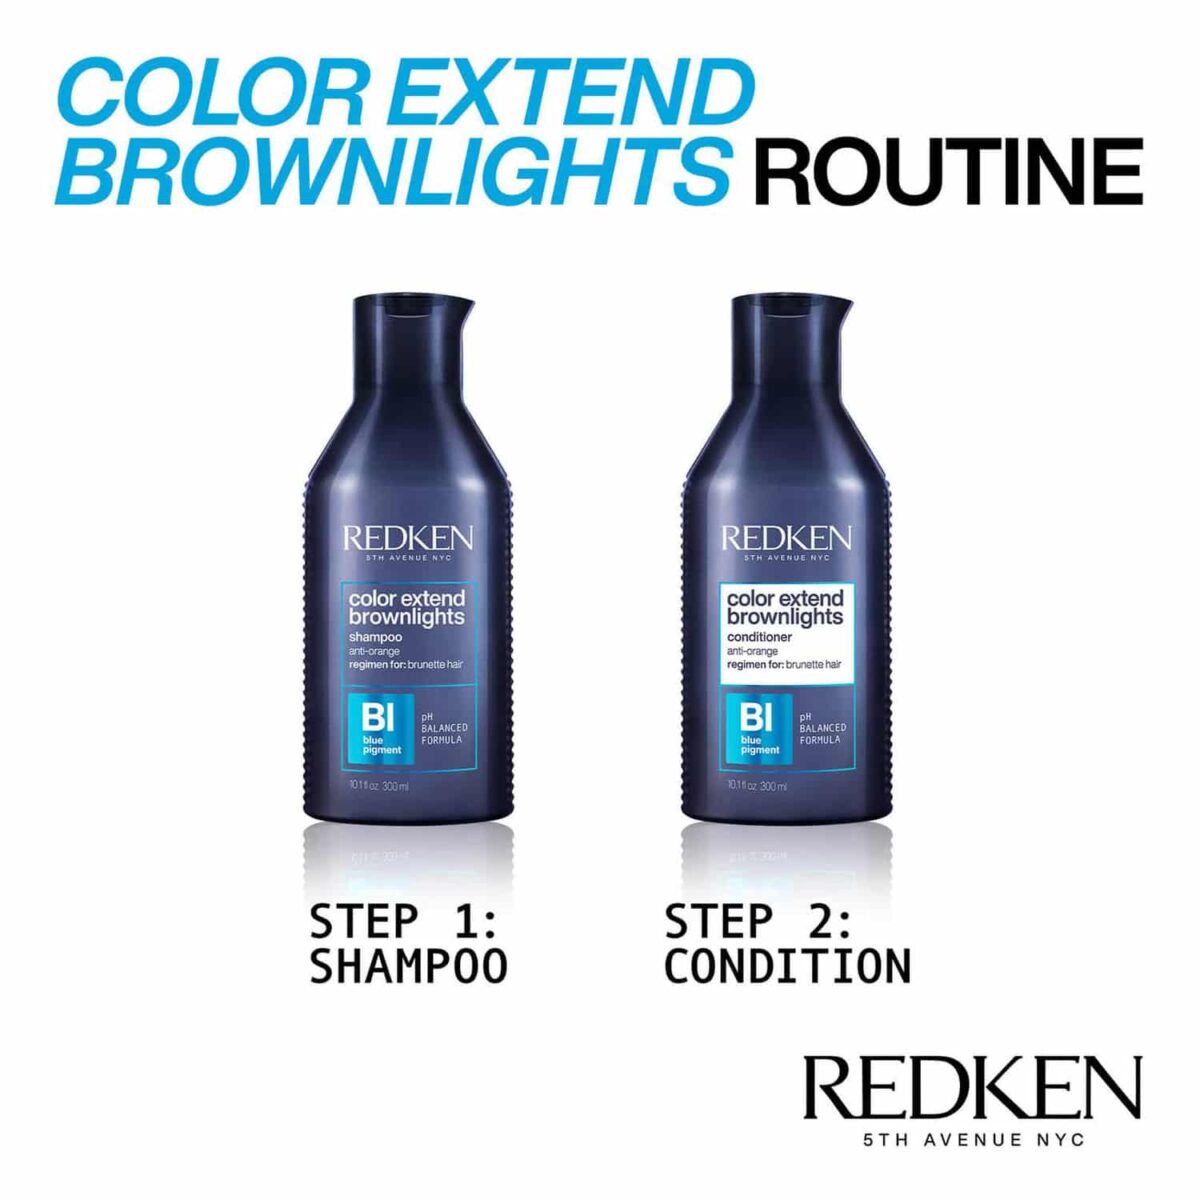 Redken Color Extend Brownlights Shampoo routine